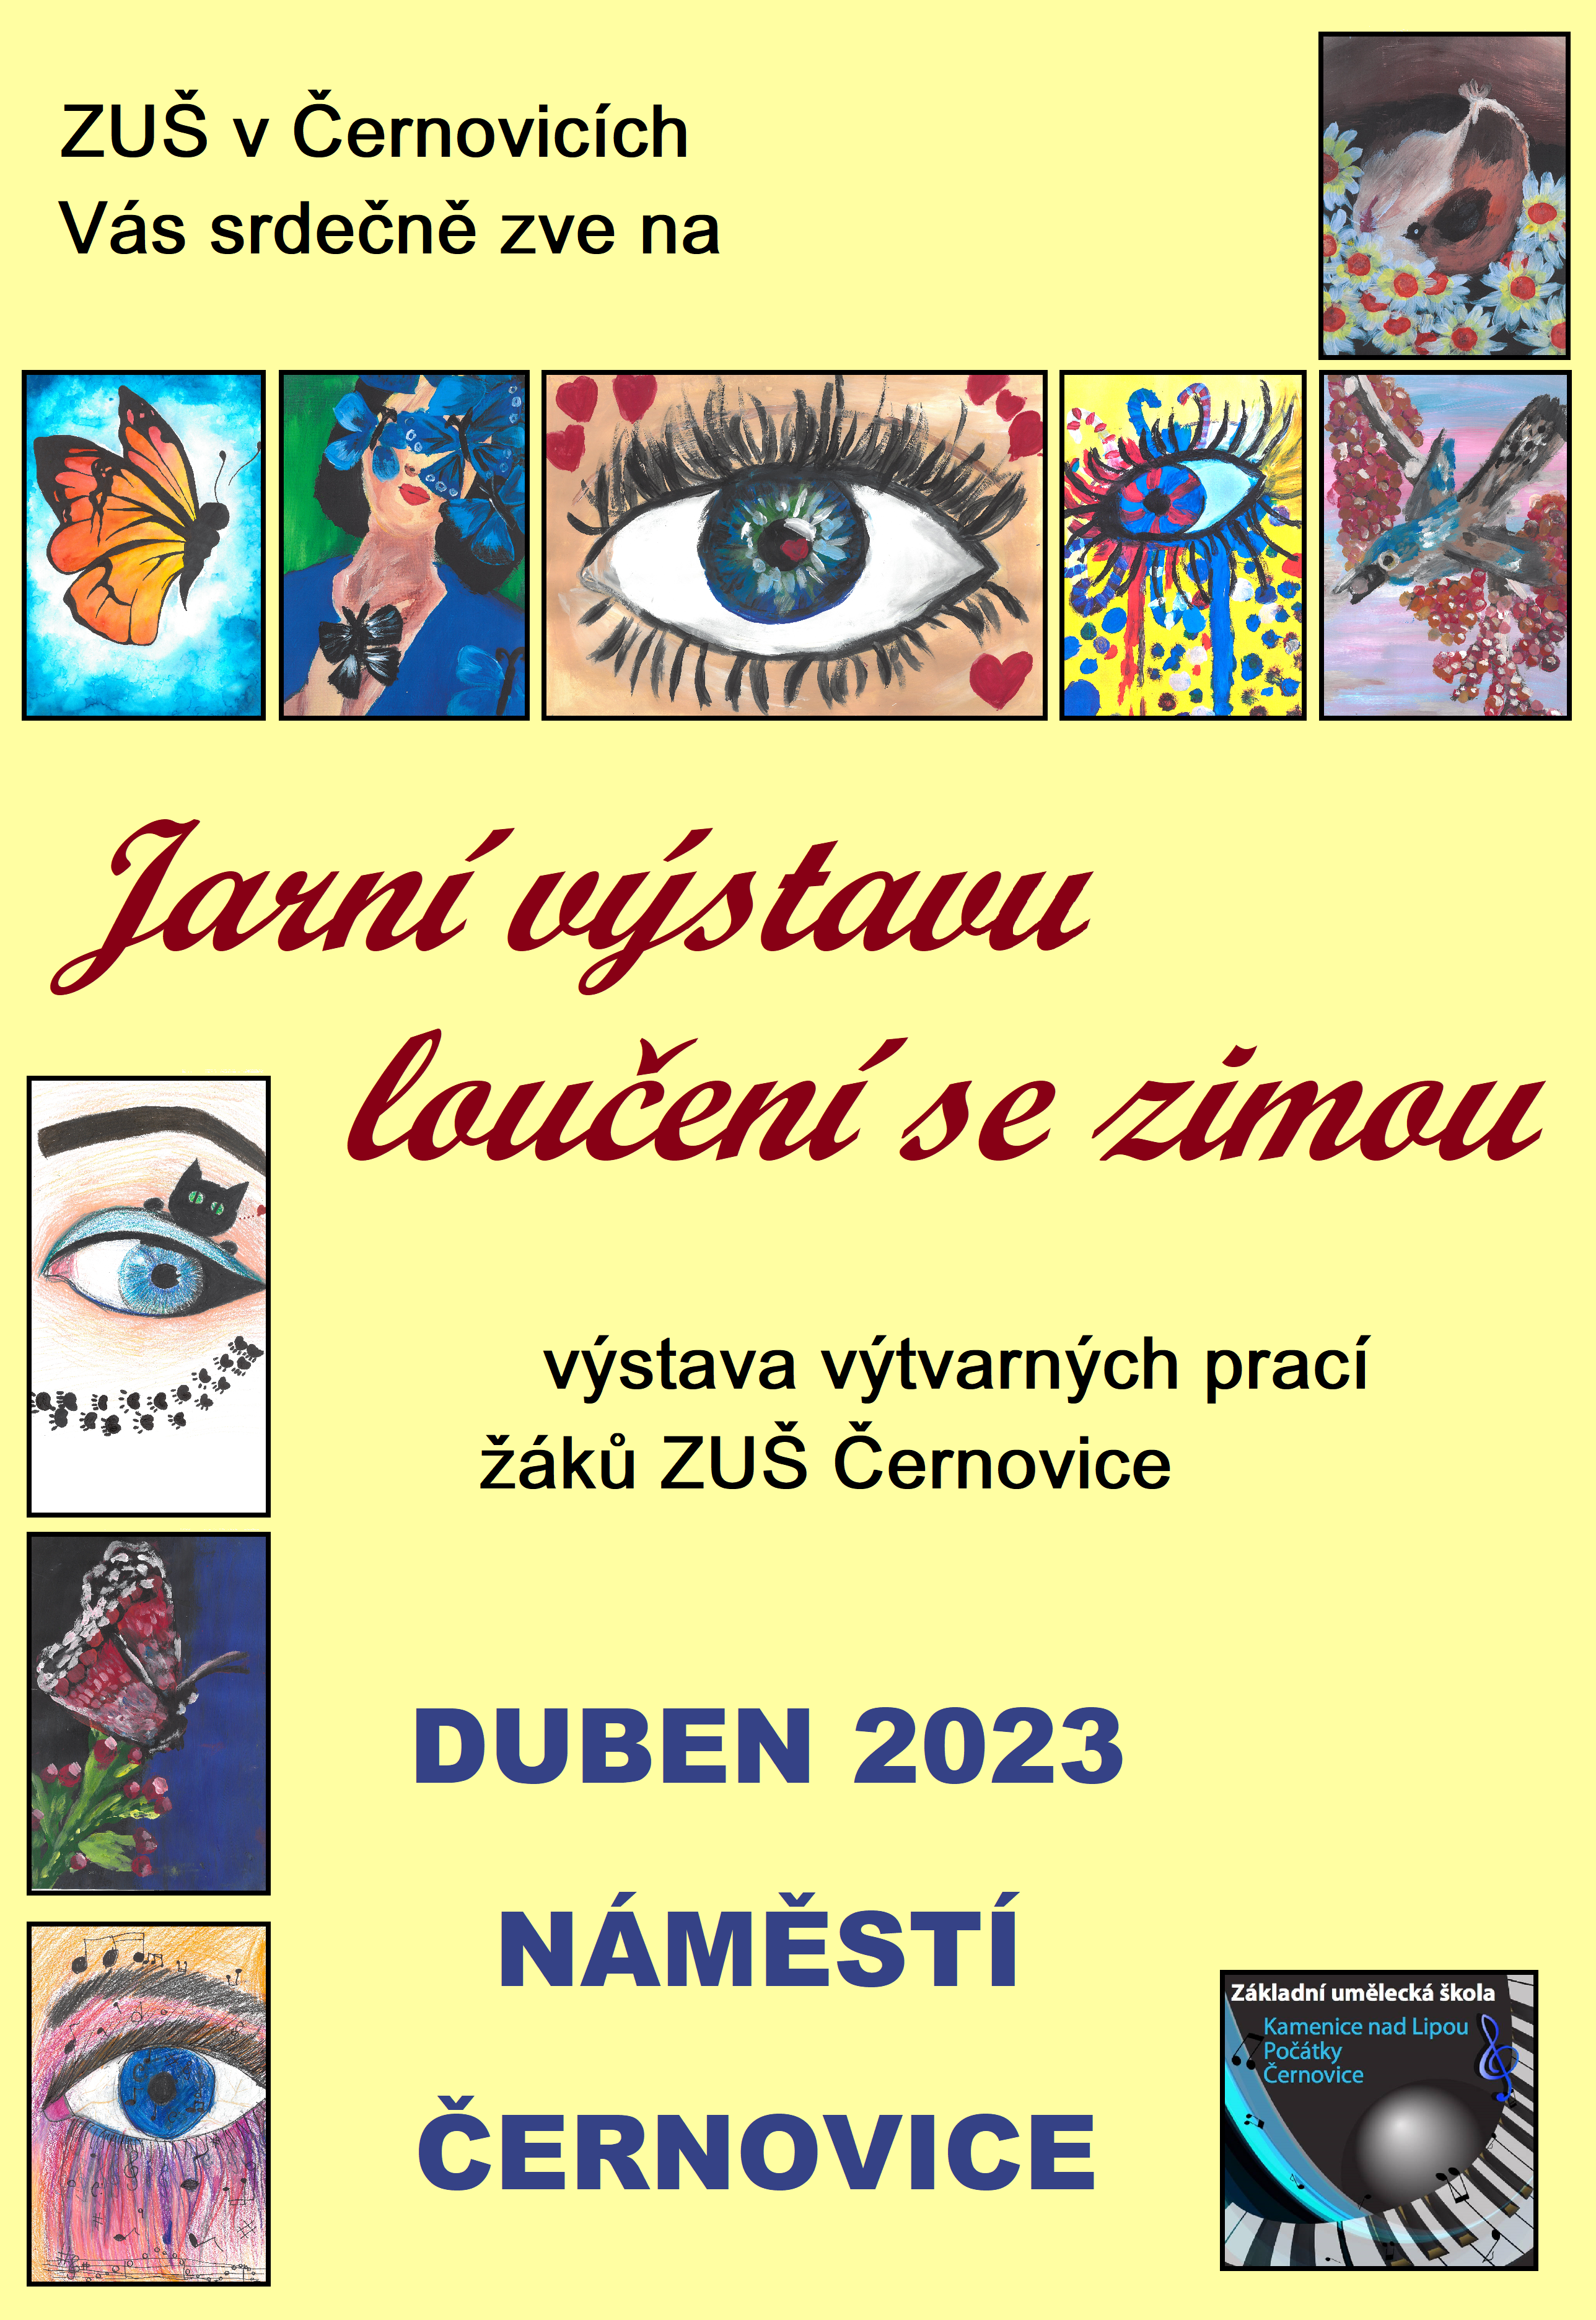 DUBEN - 2023 - VÝSTAVA VO ČERNOVICE